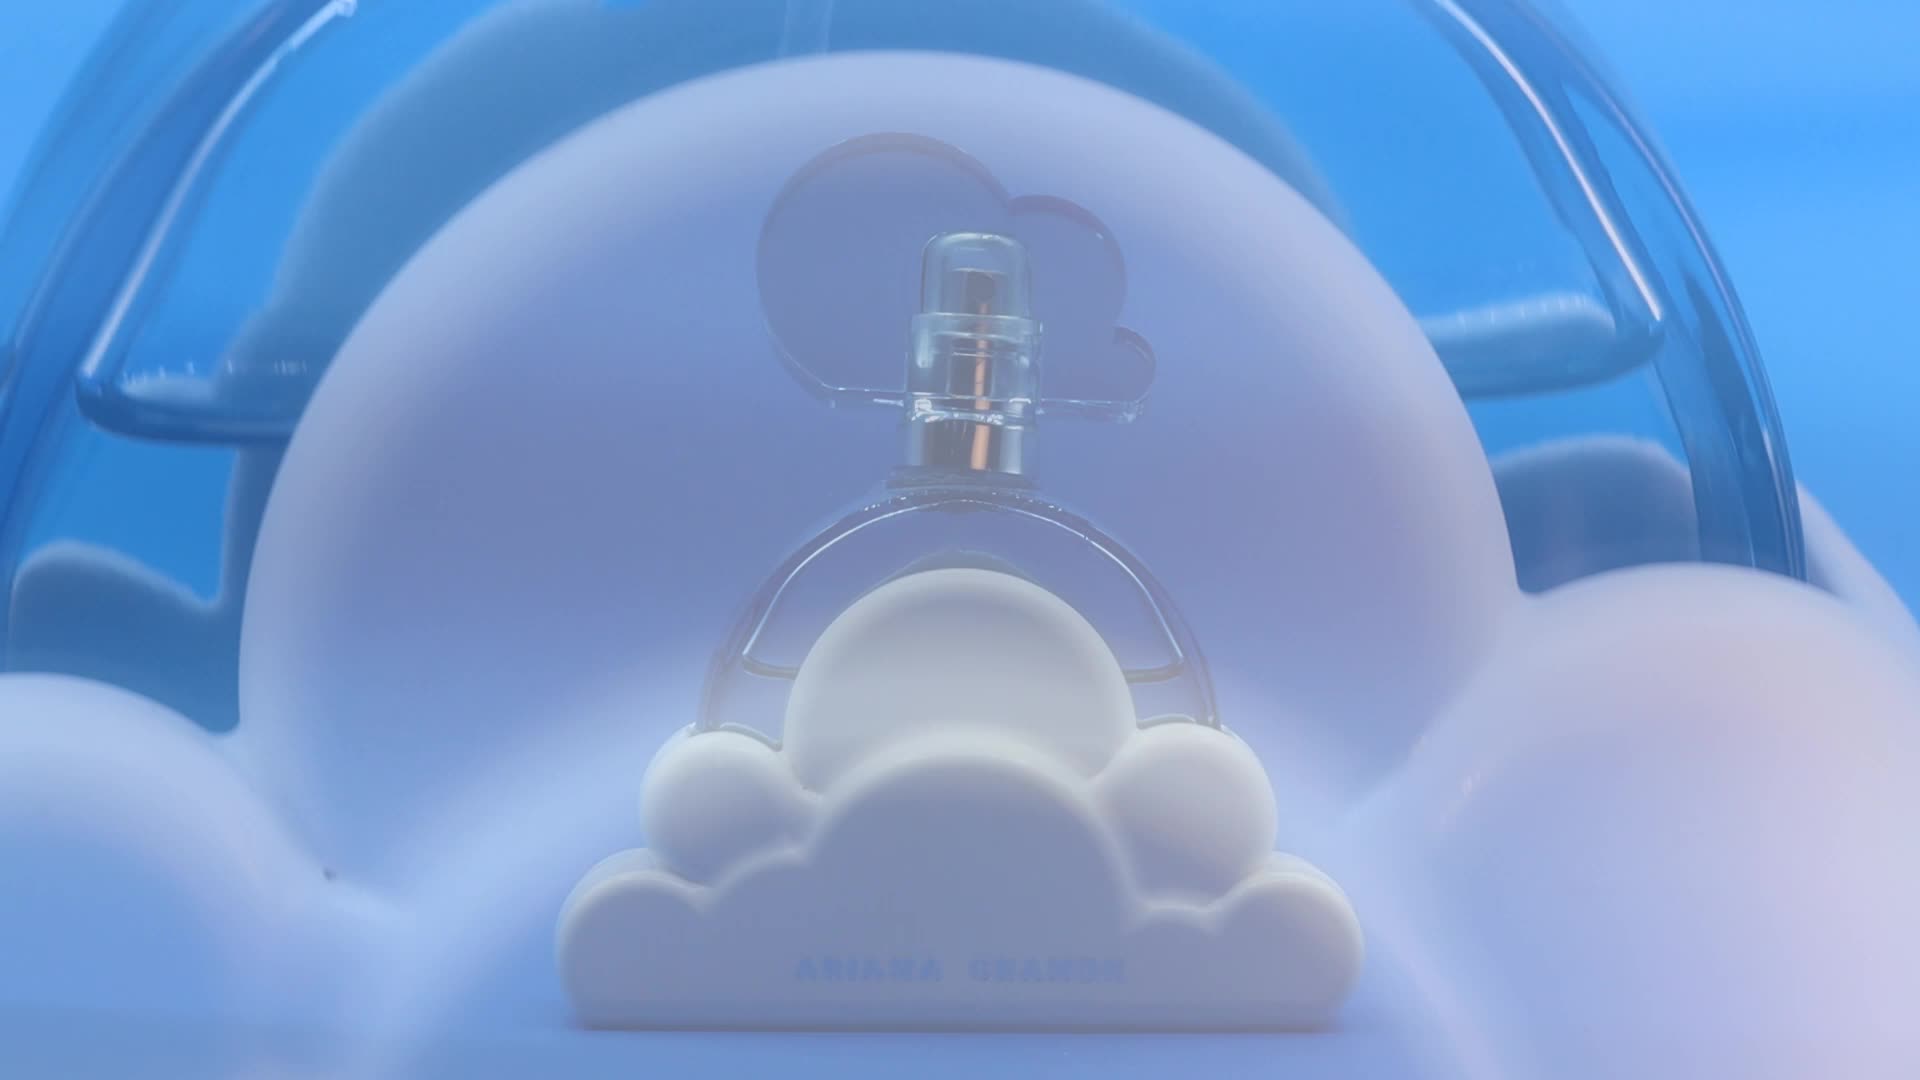 Cloud by Ariana Grande - Advert